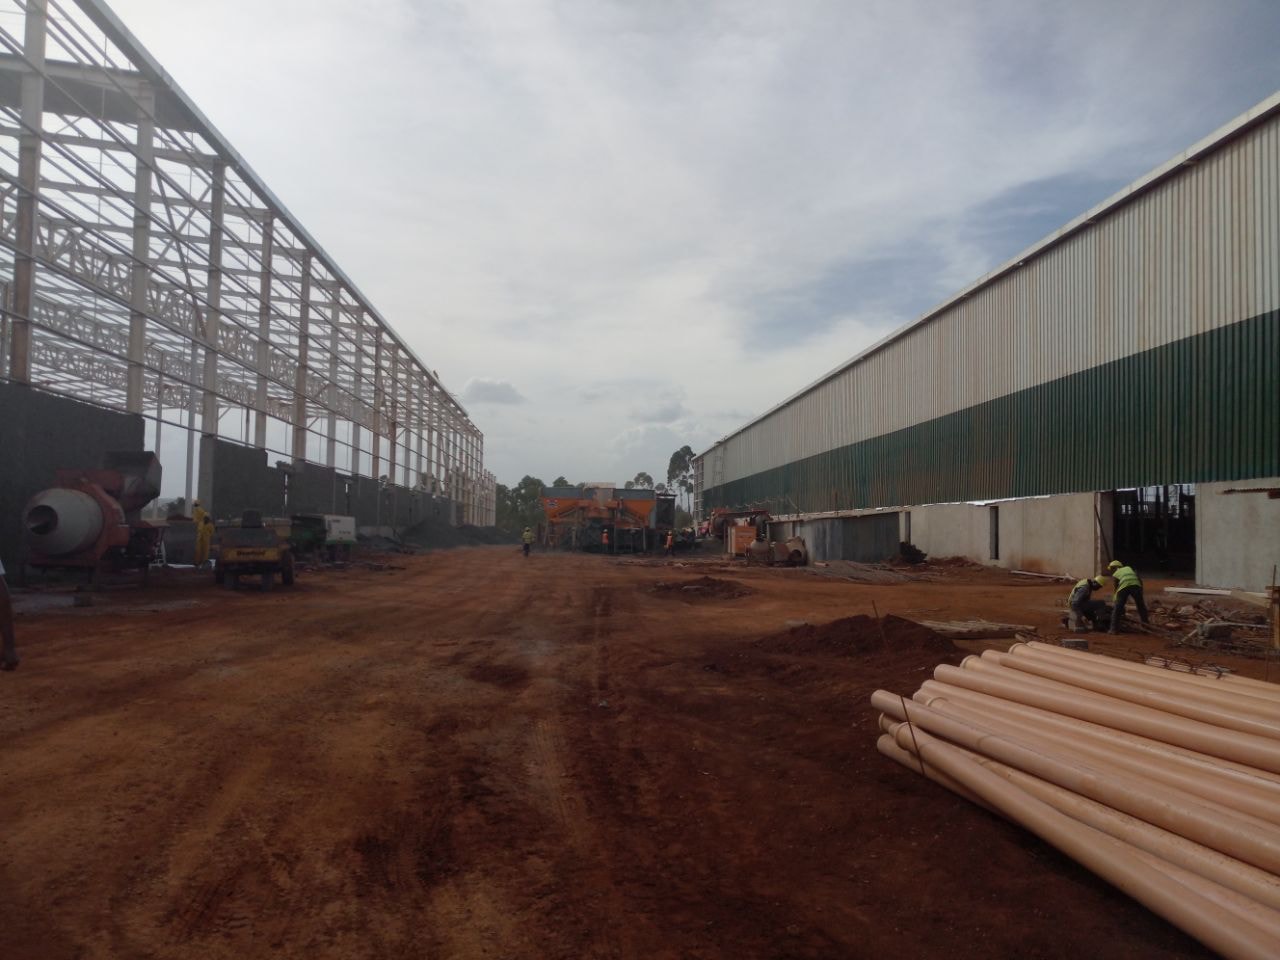 ALP North Logistics Park Construction Site in Progress